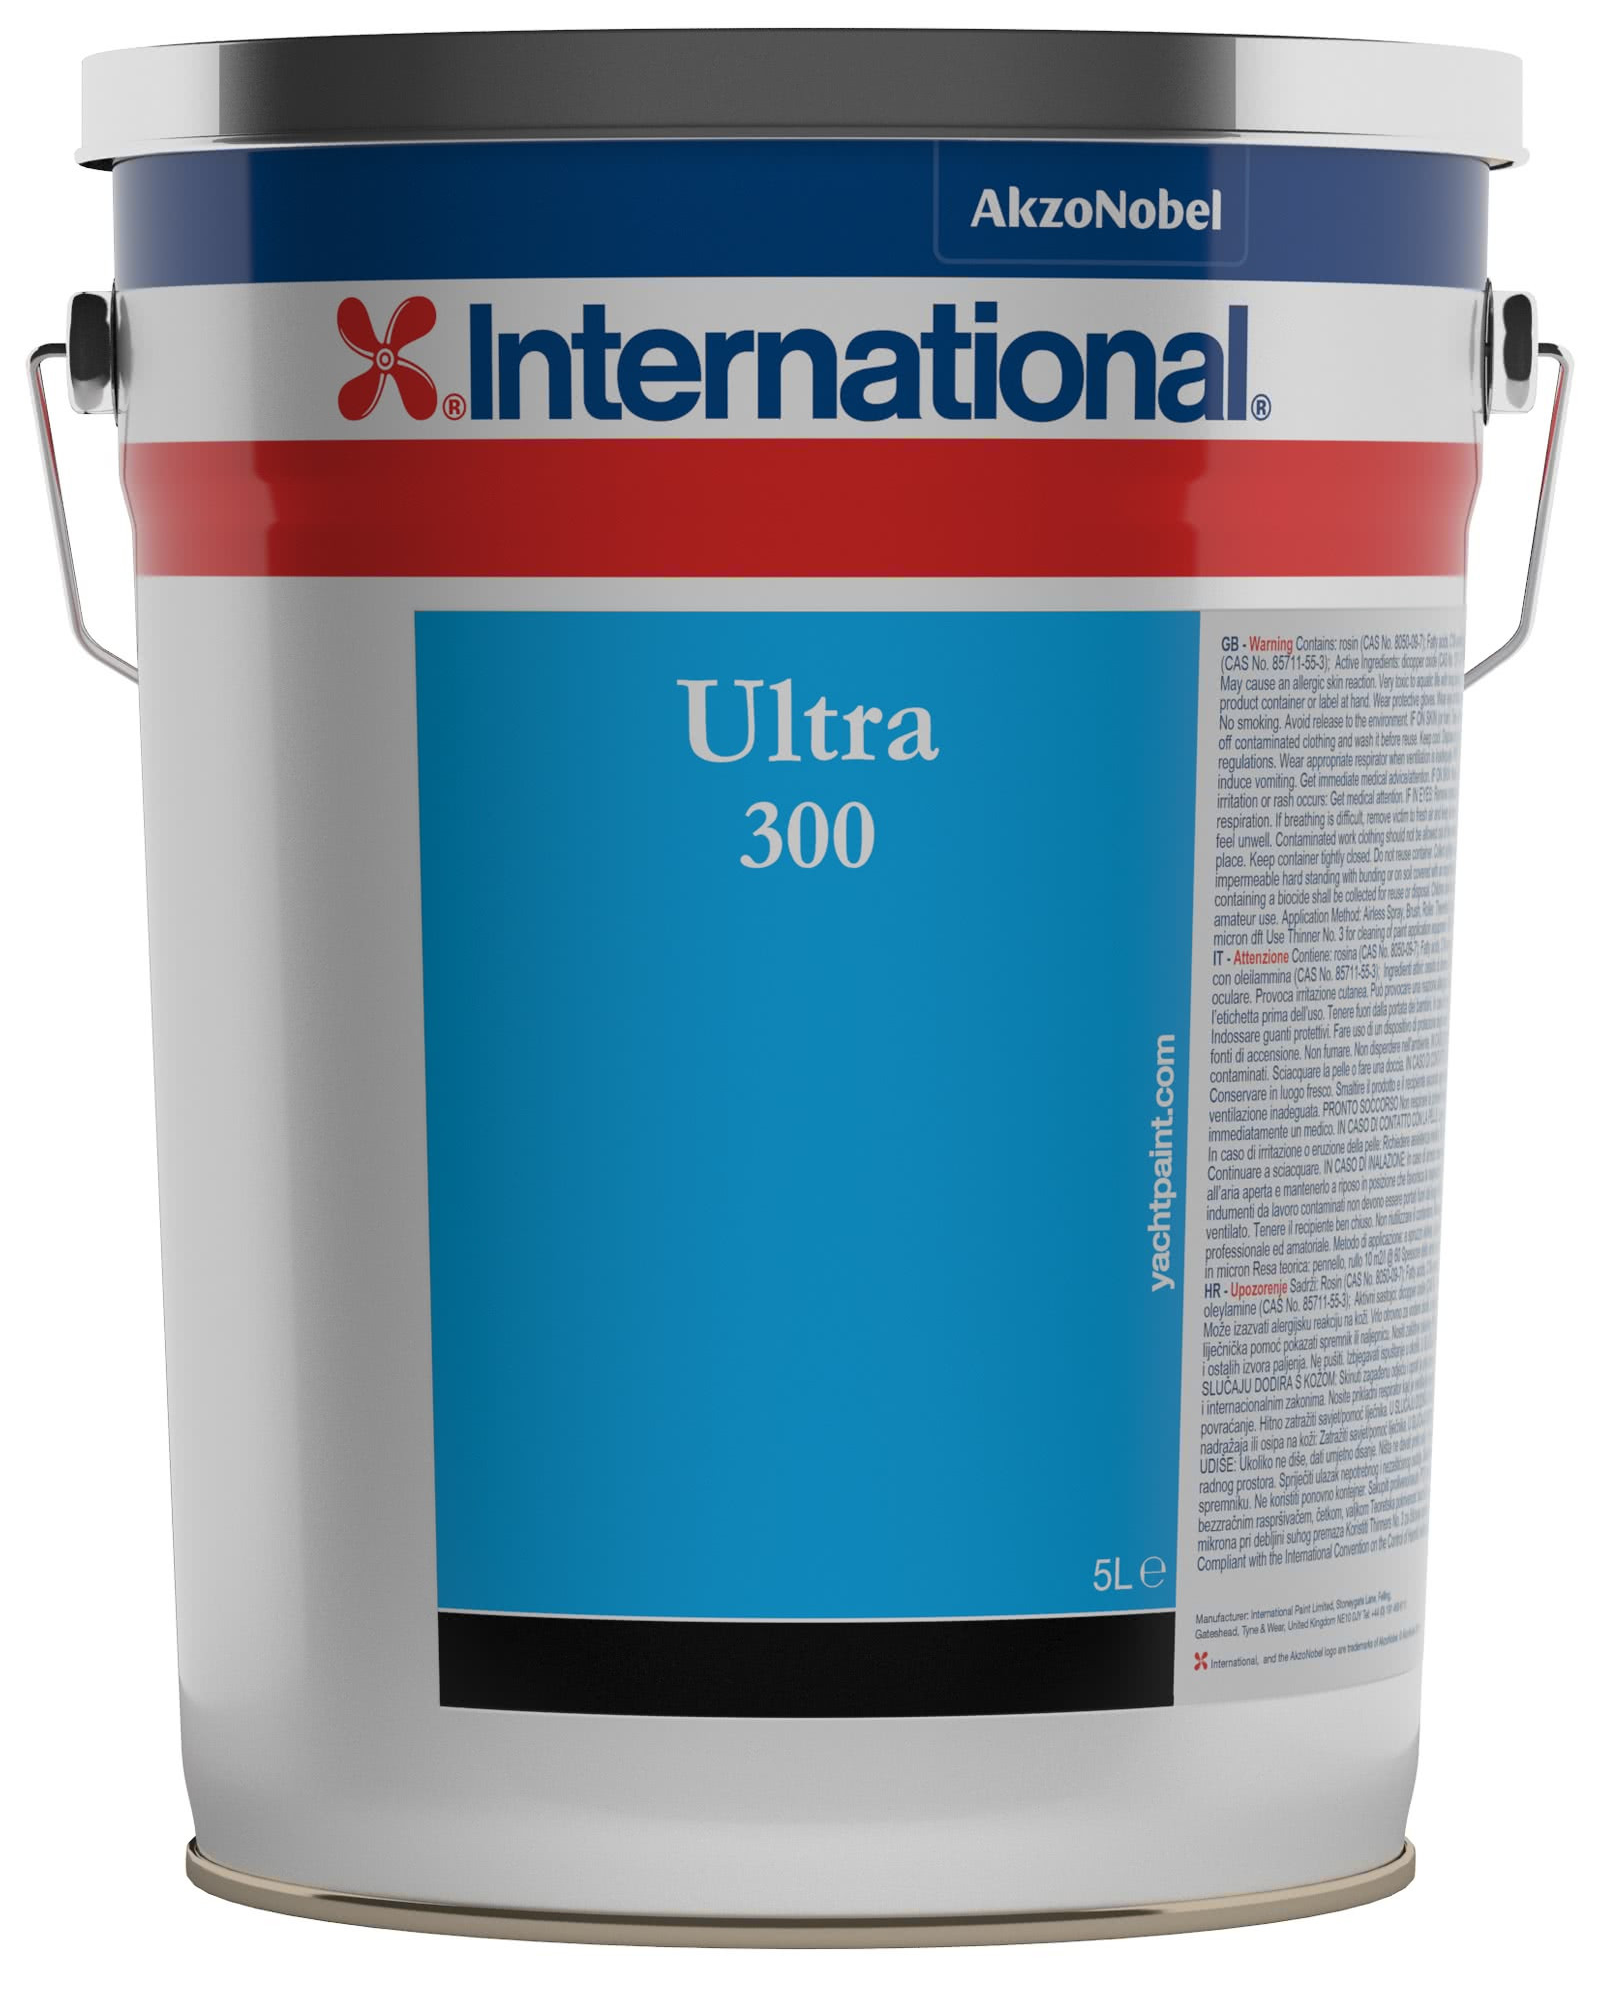 International Ultra 300 Antifouling